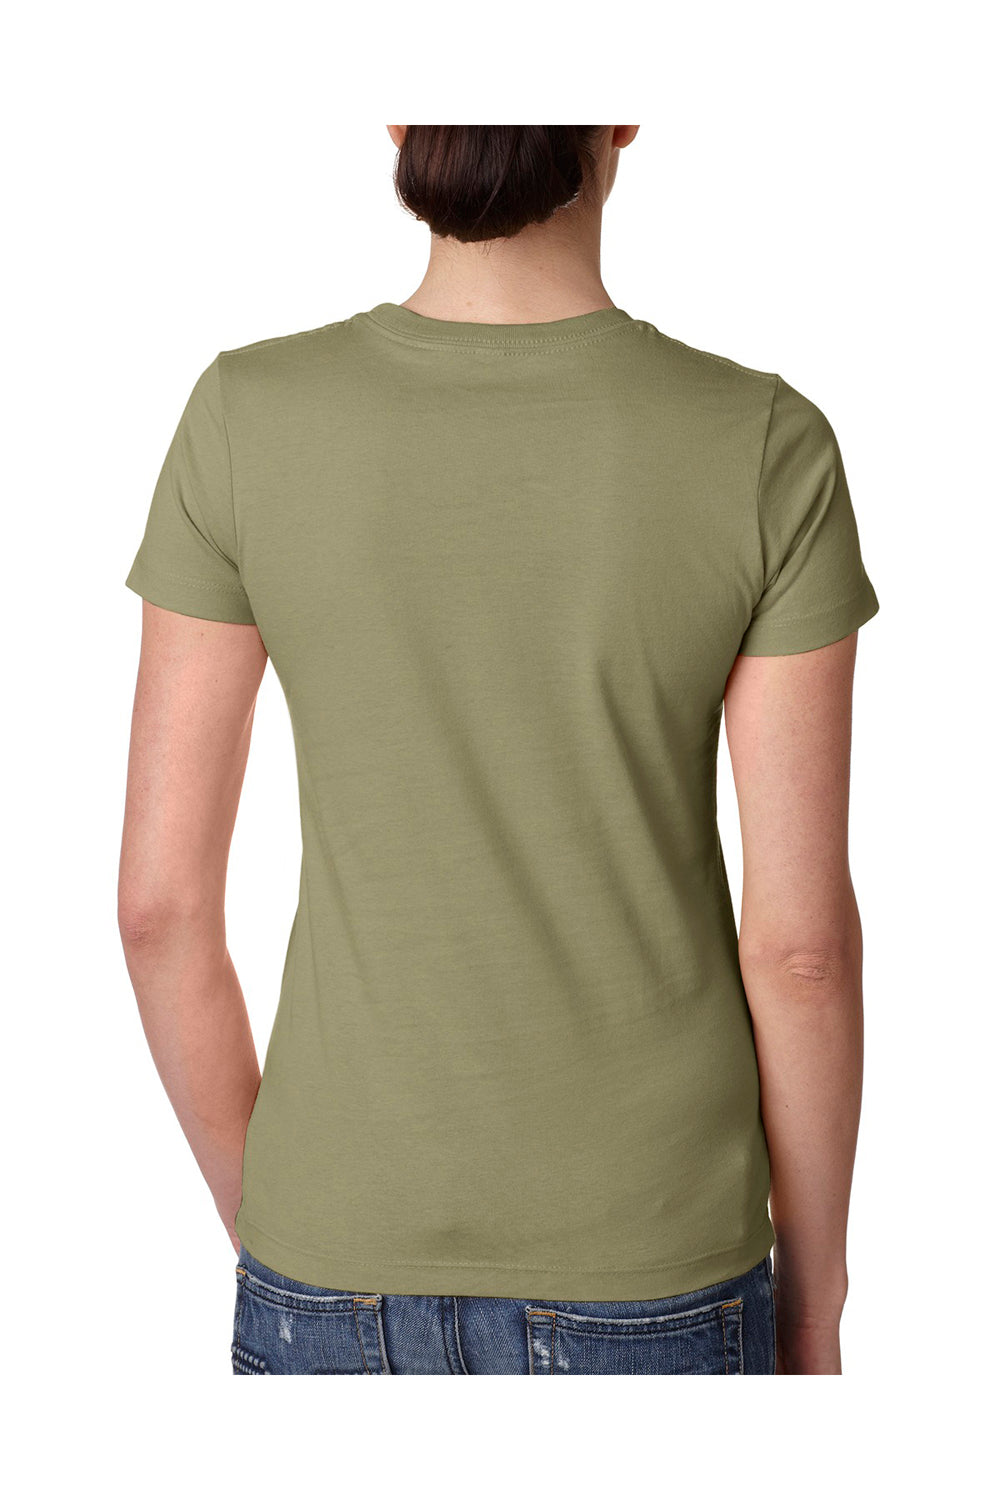 Next Level N3900 Womens Boyfriend Fine Jersey Short Sleeve Crewneck T-Shirt Light Olive Green Back